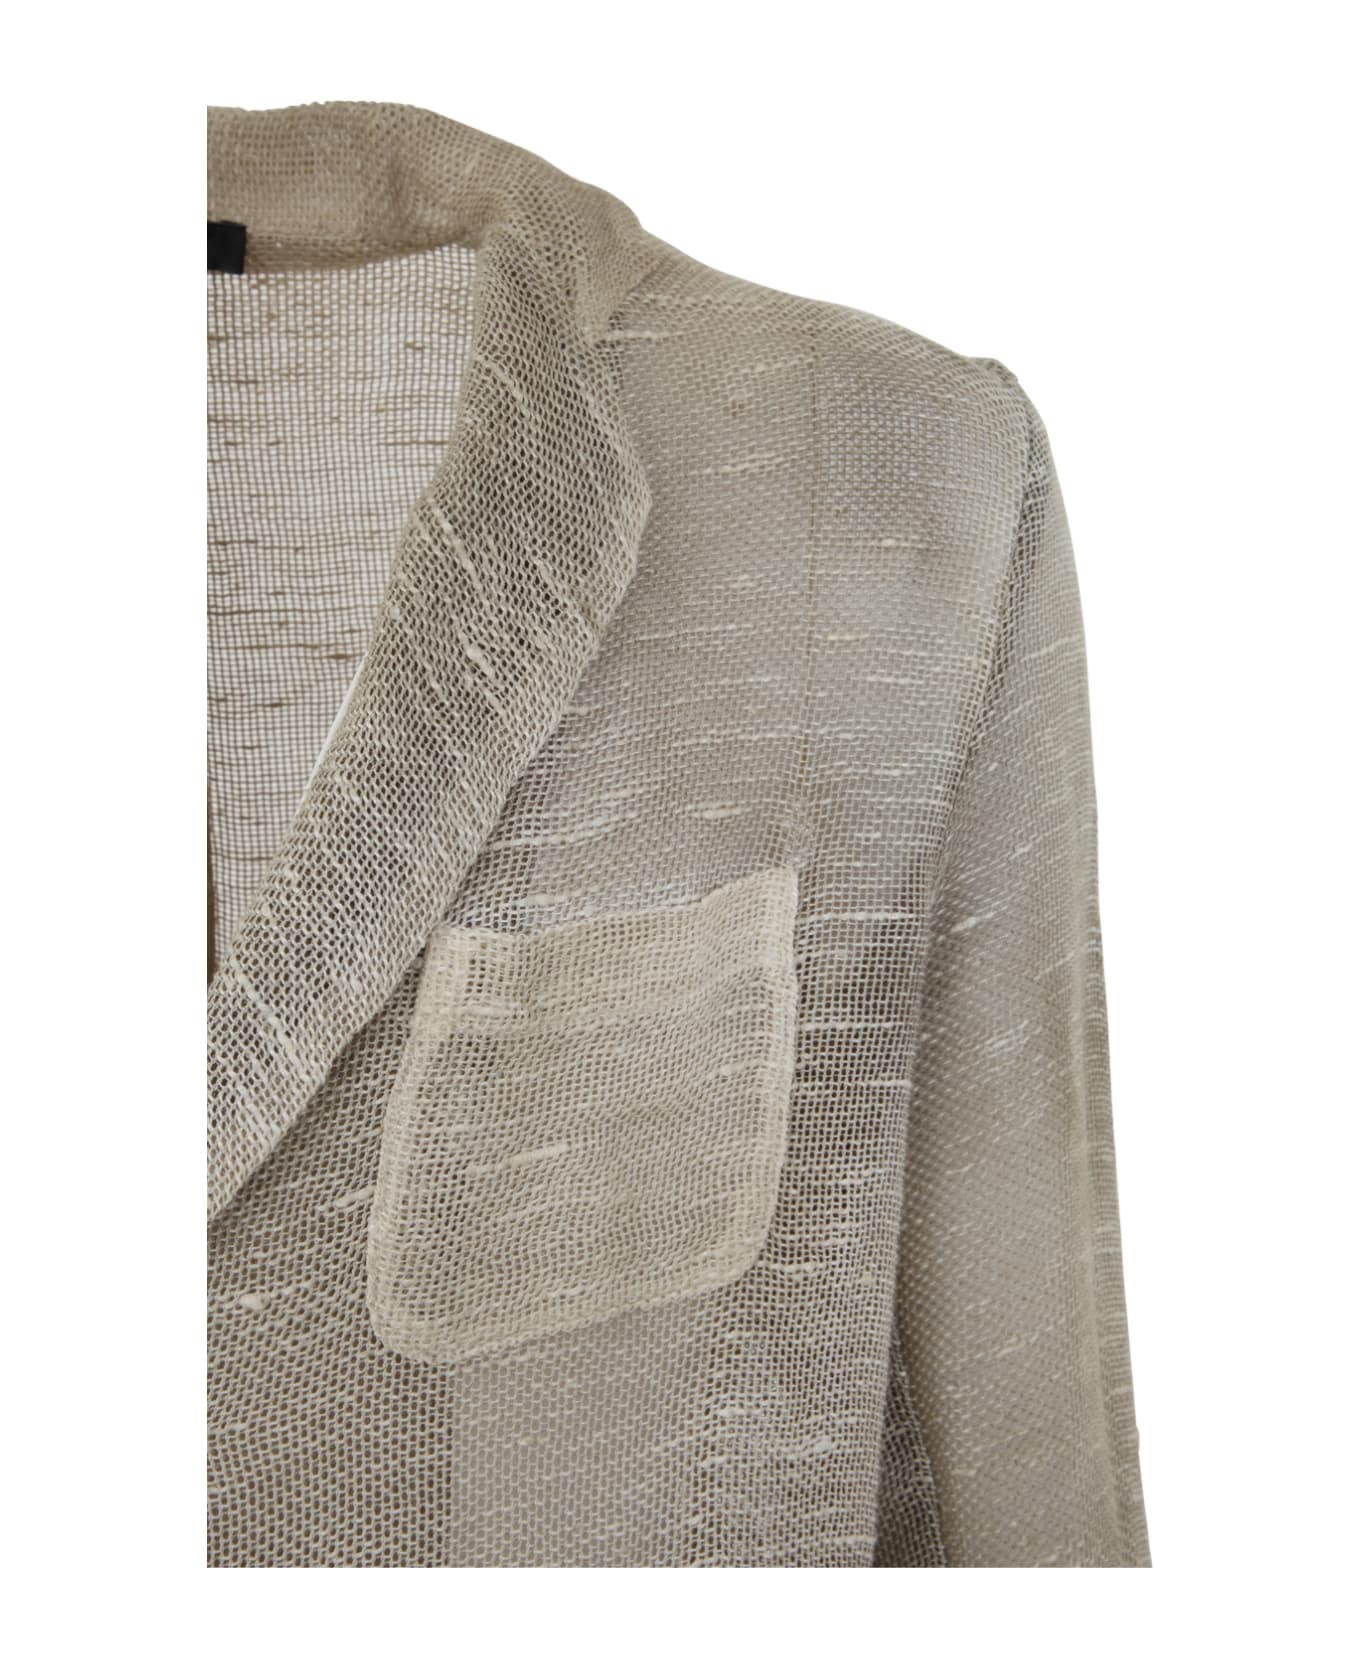 Avant Toi Black Camouflage Net Fabric Jacket - Zenzero ブレザー